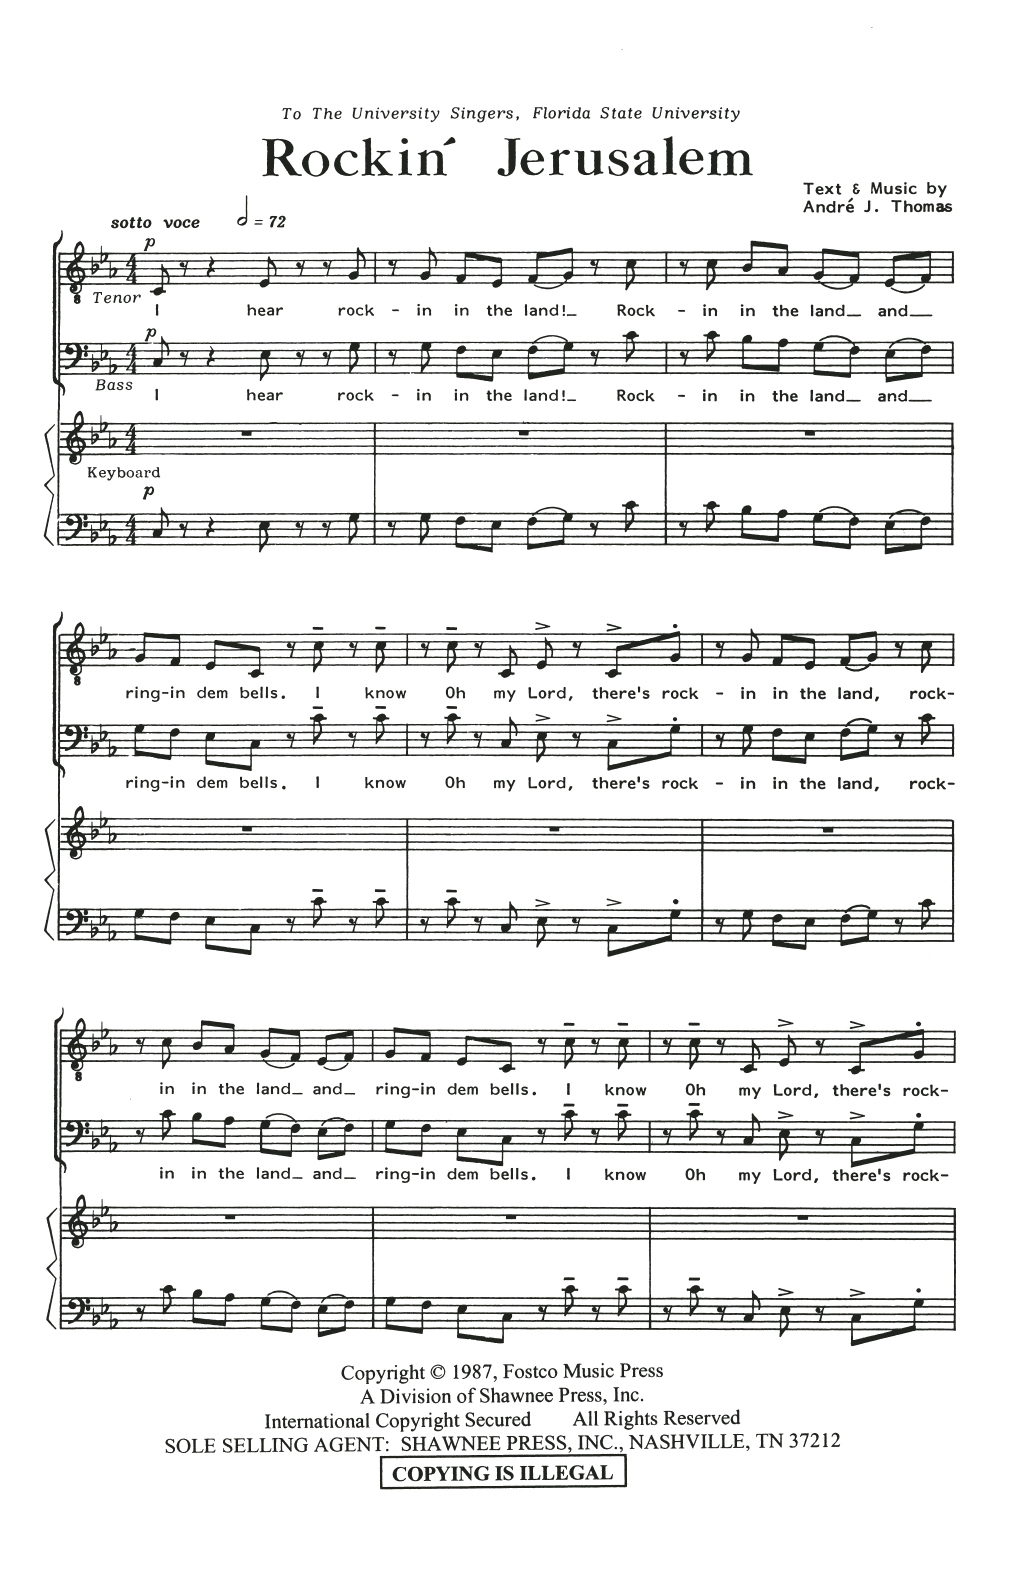 Andre J. Thomas Rockin' Jerusalem Sheet Music Notes & Chords for SATB Choir - Download or Print PDF